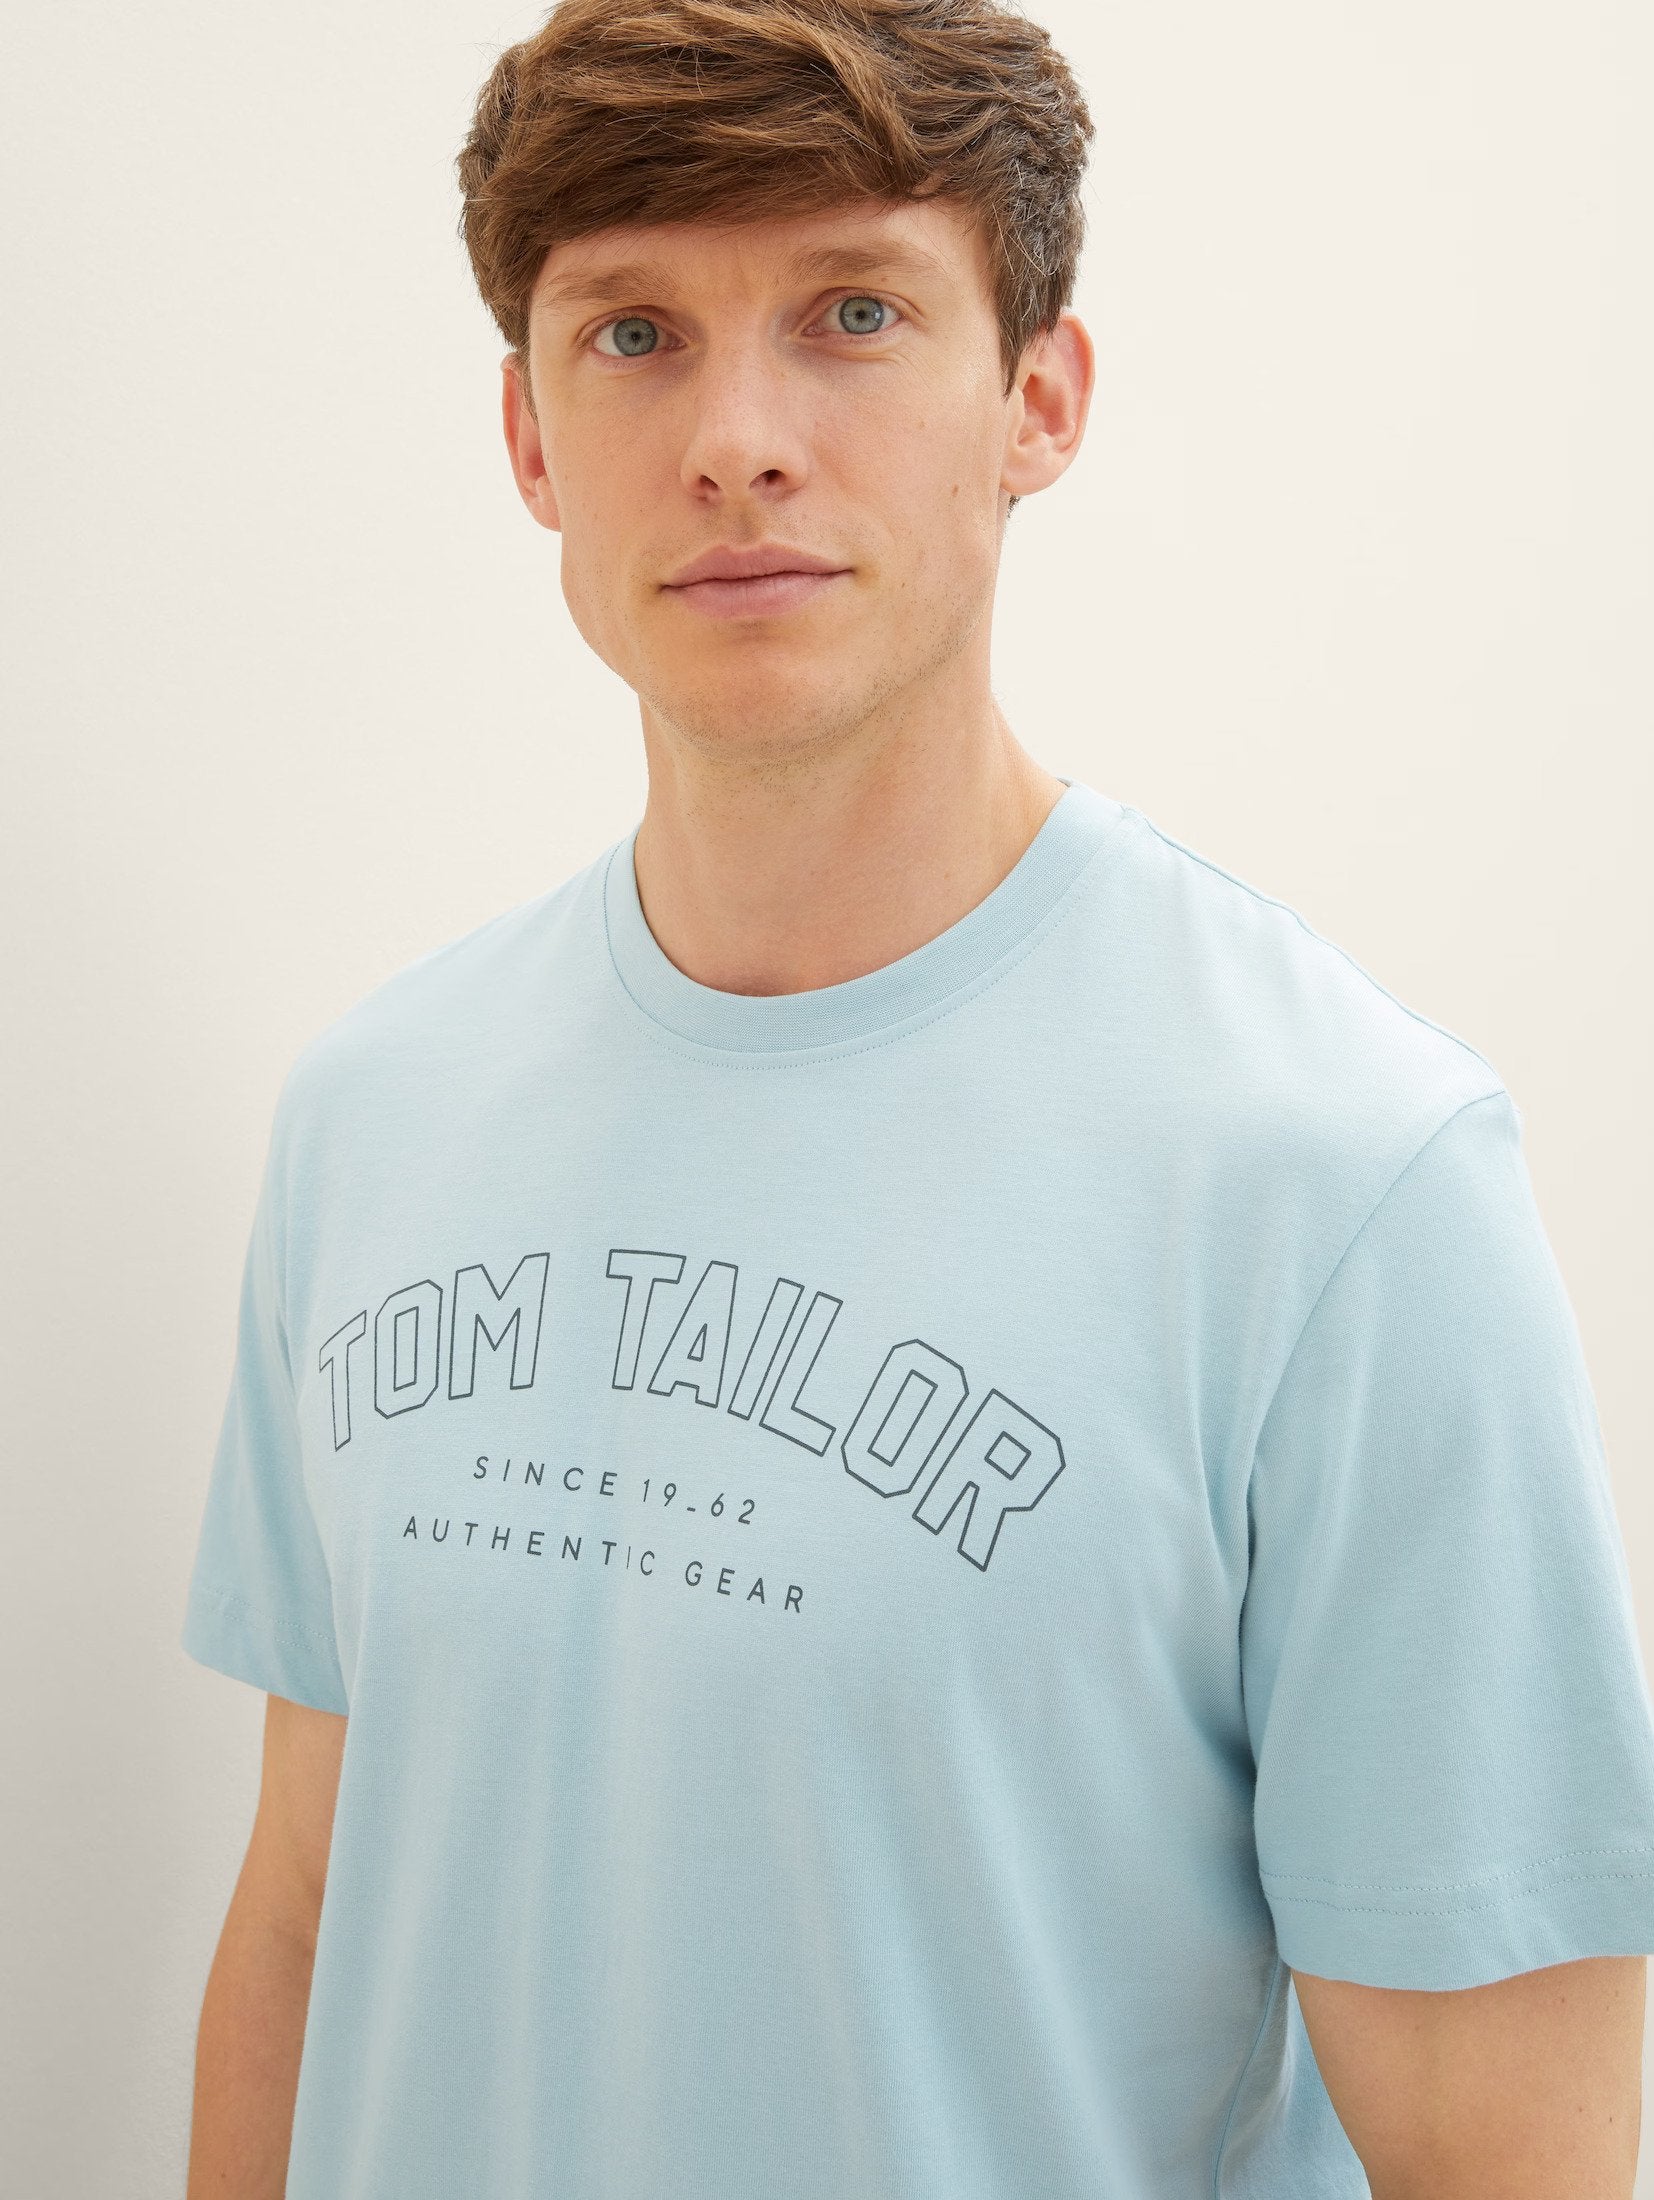 Tom Tailor Logo Printed Light Blue T shirt